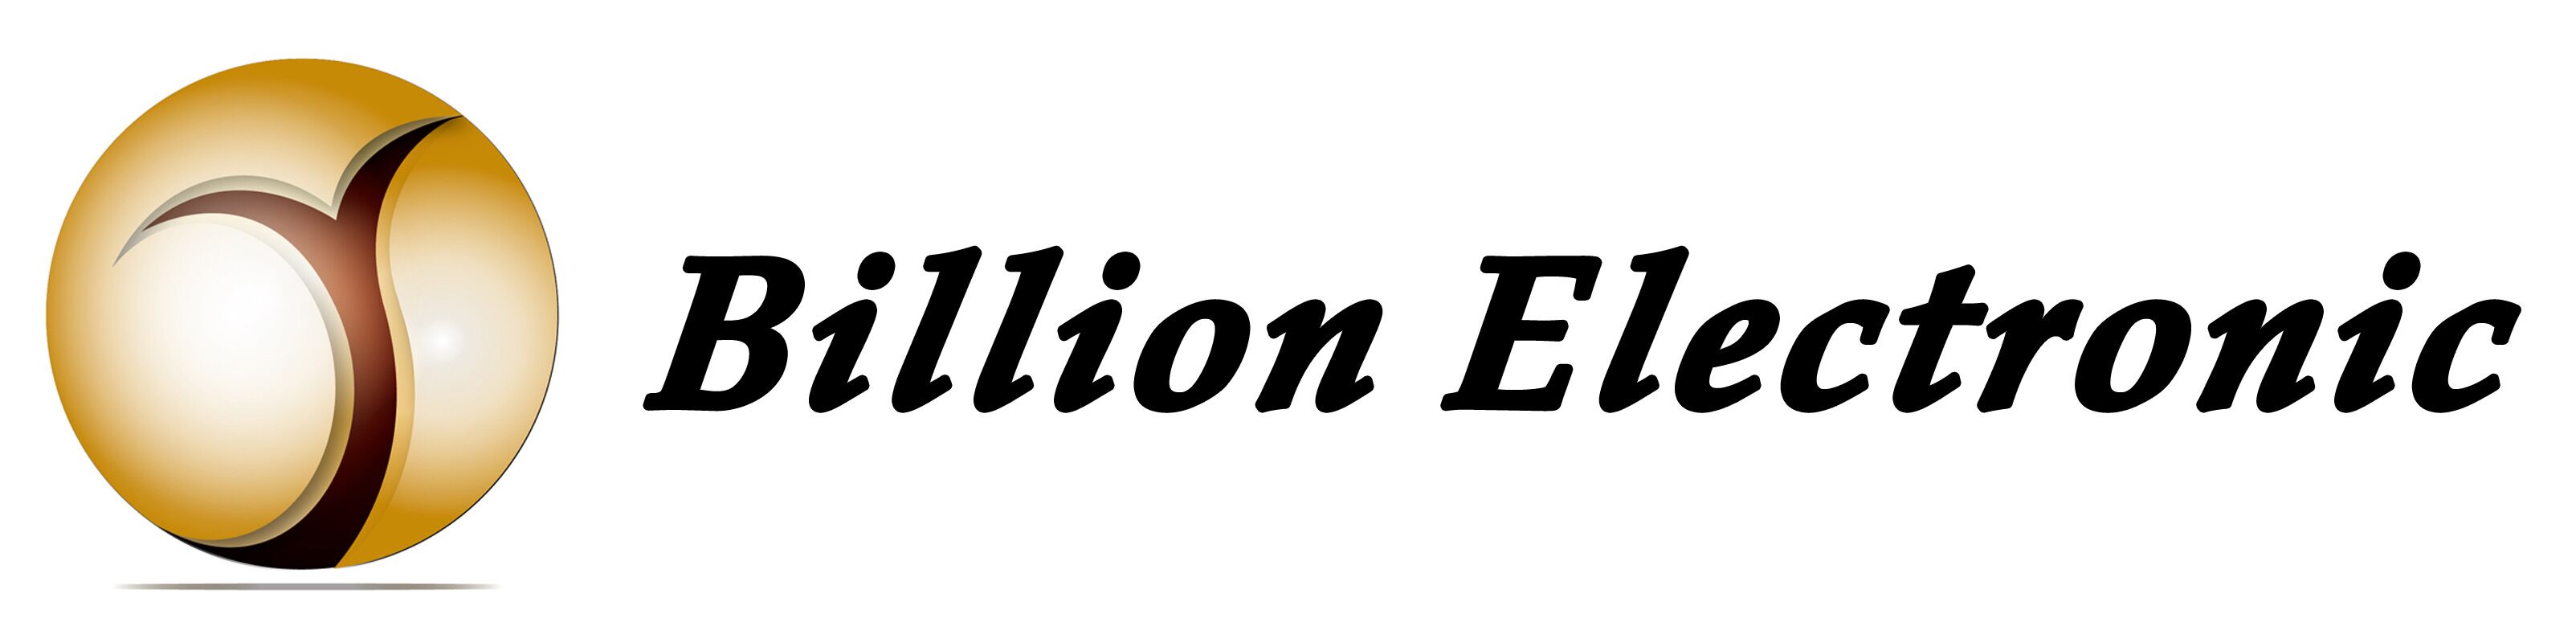 Billion Electronic